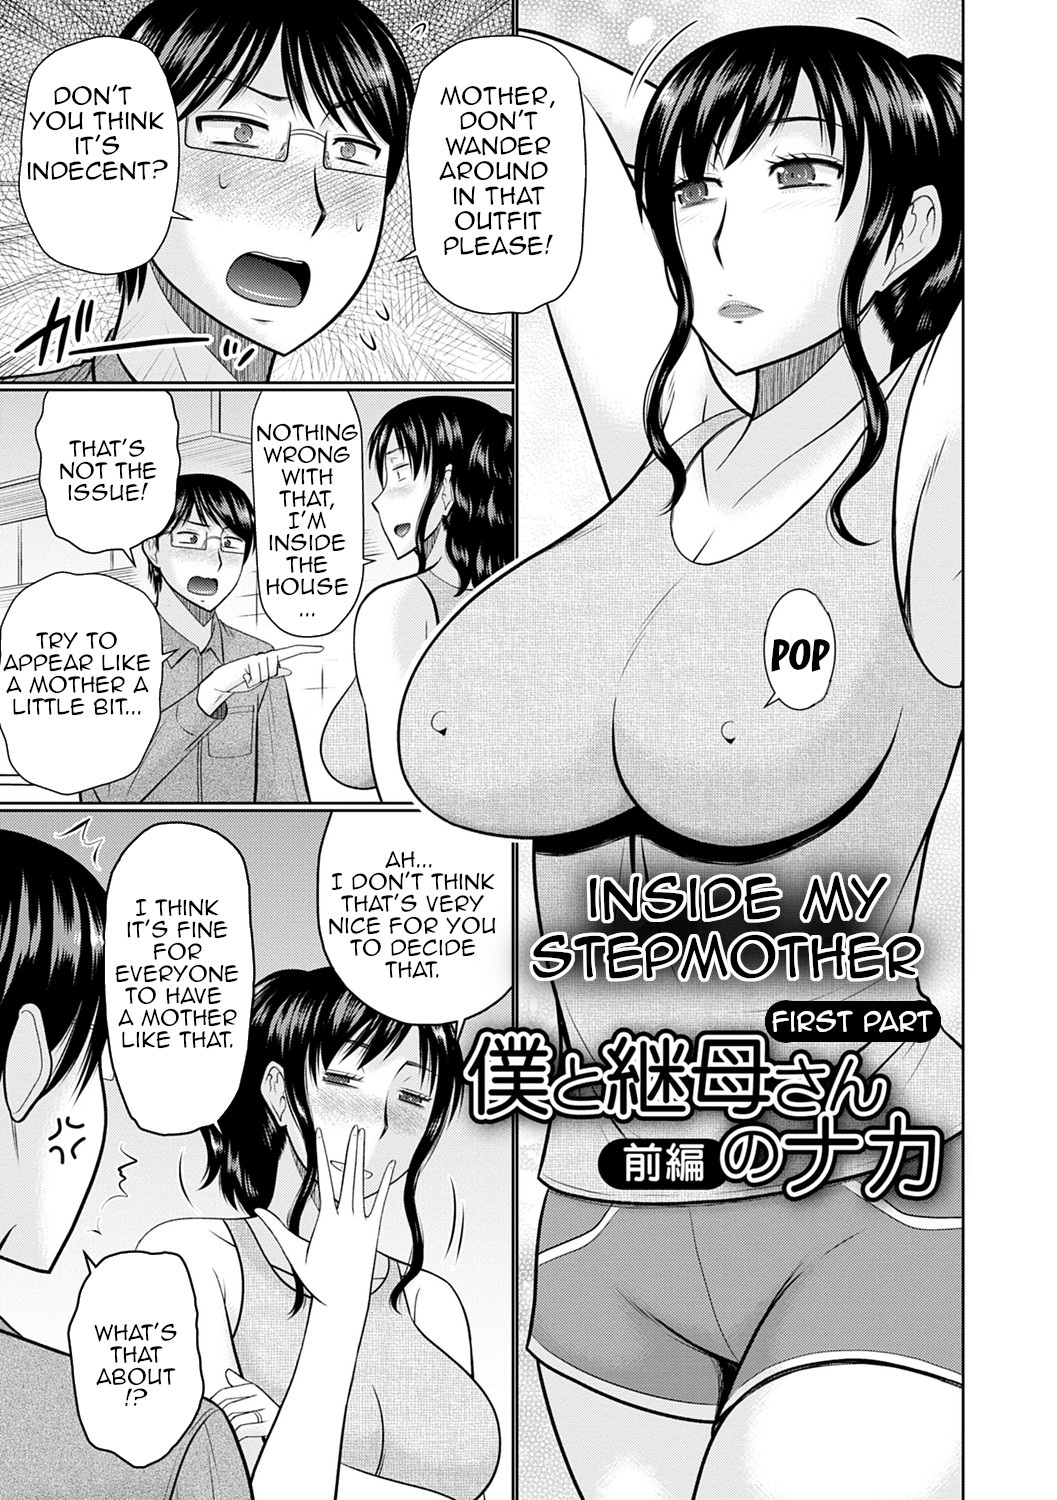 Hentai Manga Comic-Inside my Stepmother-Read-1